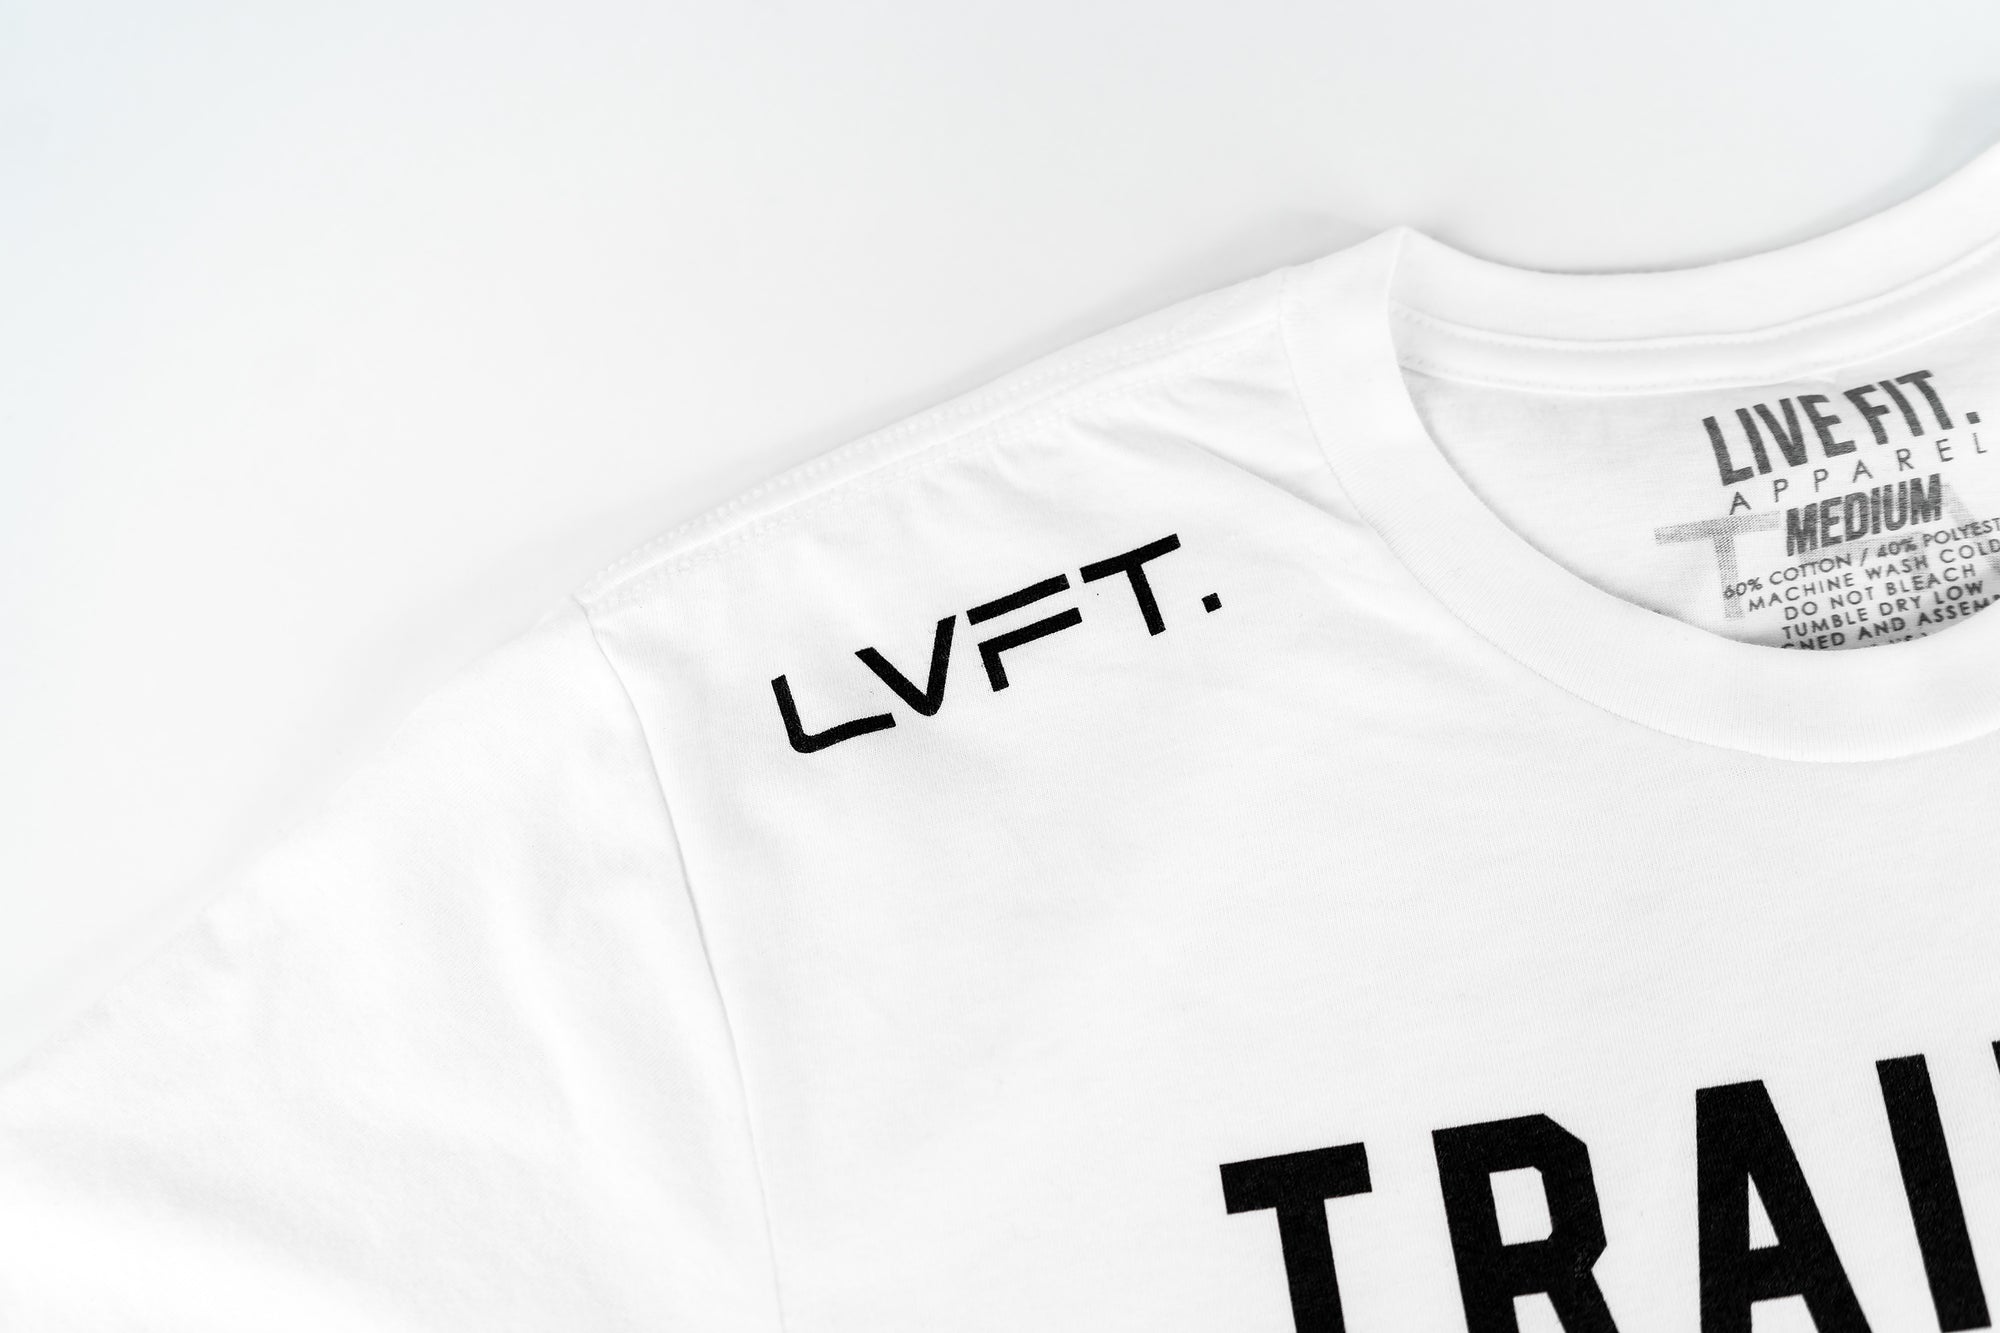 Team LVFT Tee - White Hot on Sale 